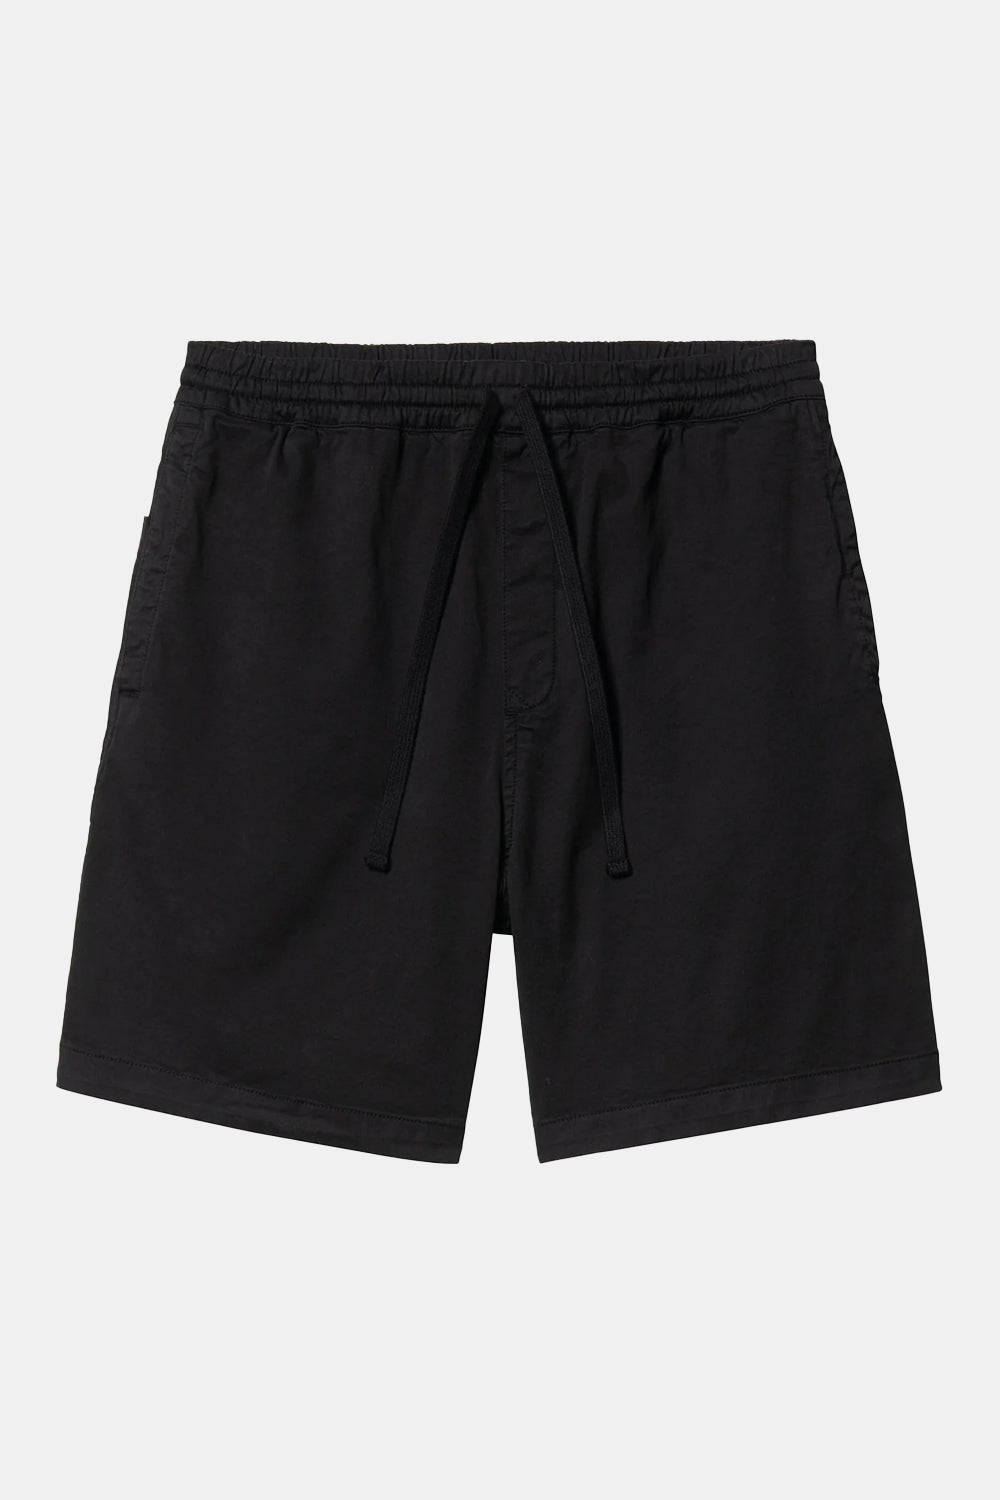 Carhartt WIP Lawton Shorts (Black) | Number Six